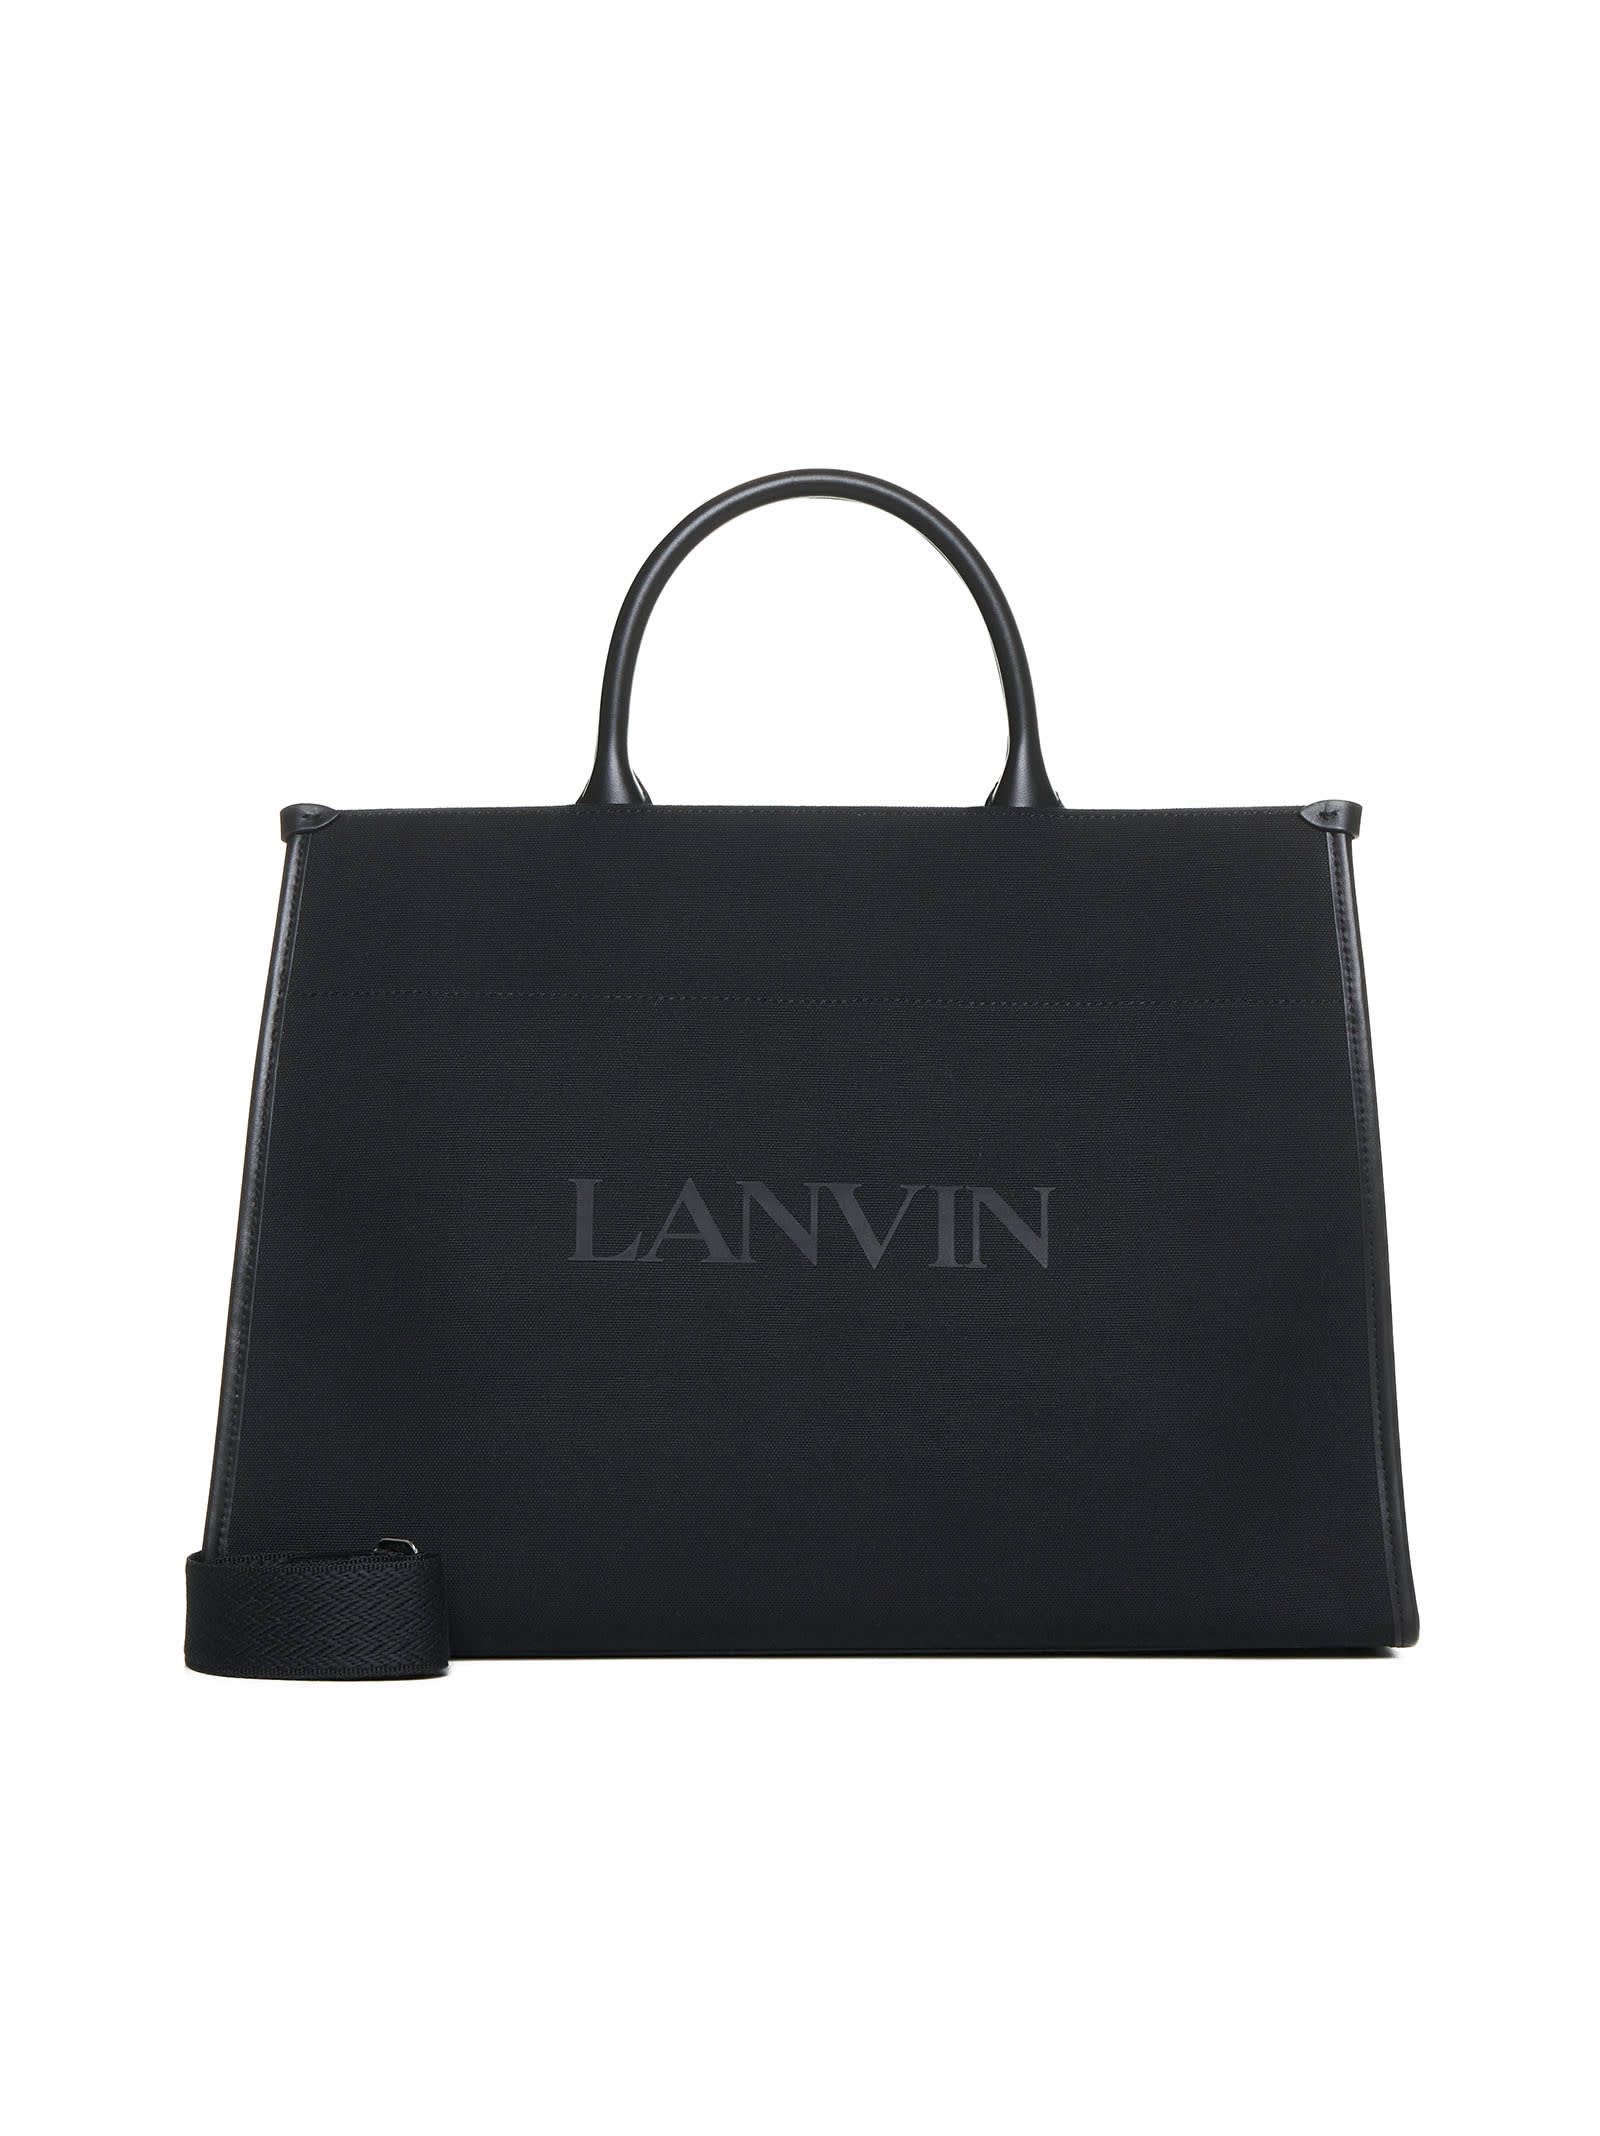 Lanvin Bag